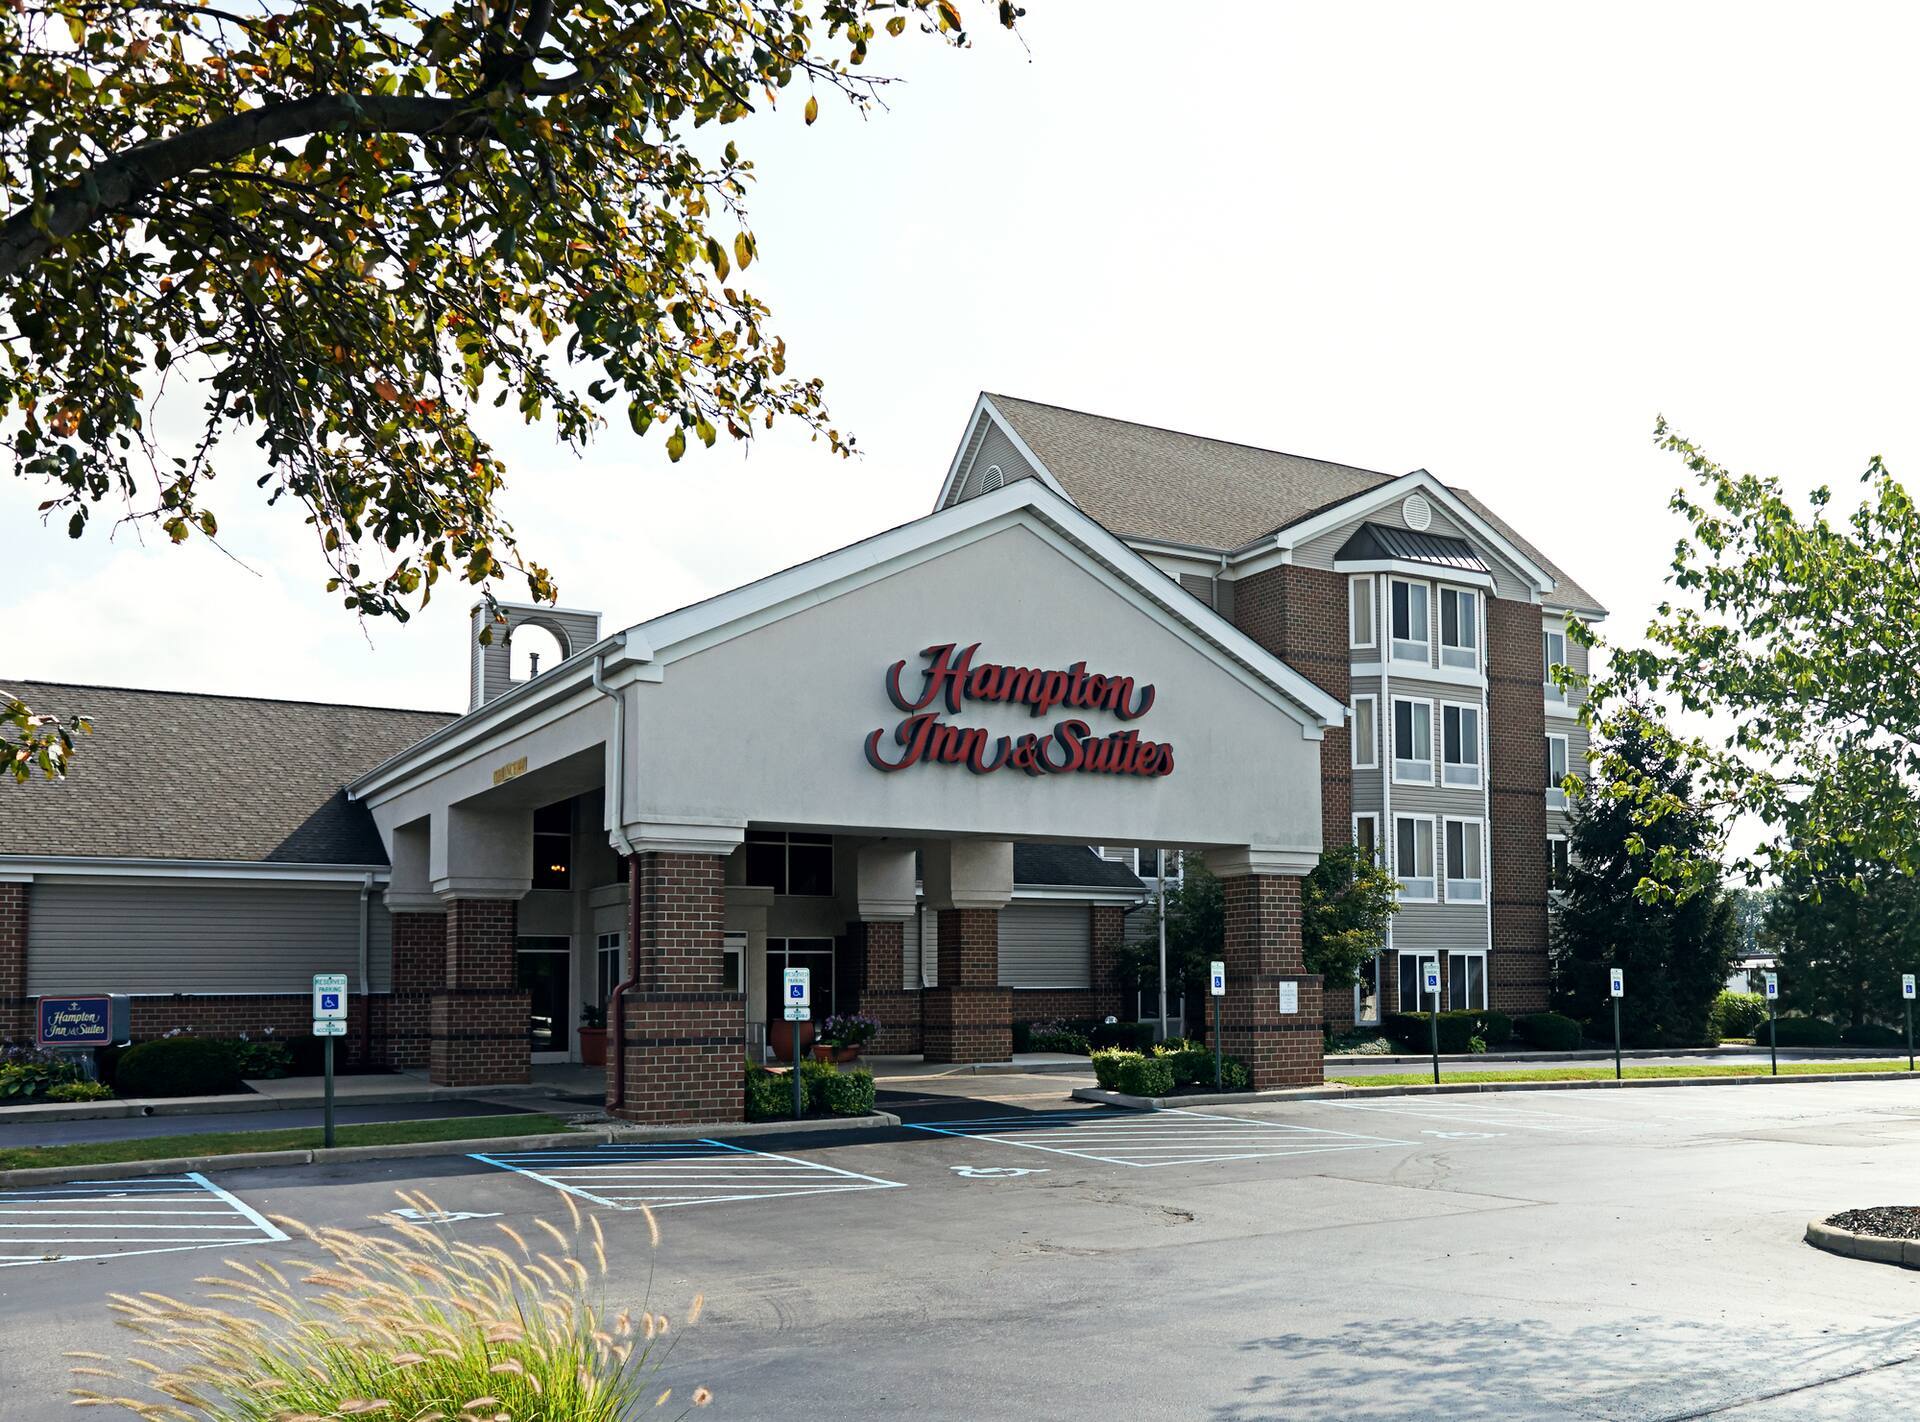 Photo of Hampton Inn & Suites Scottsburg, Scottsburg, IN